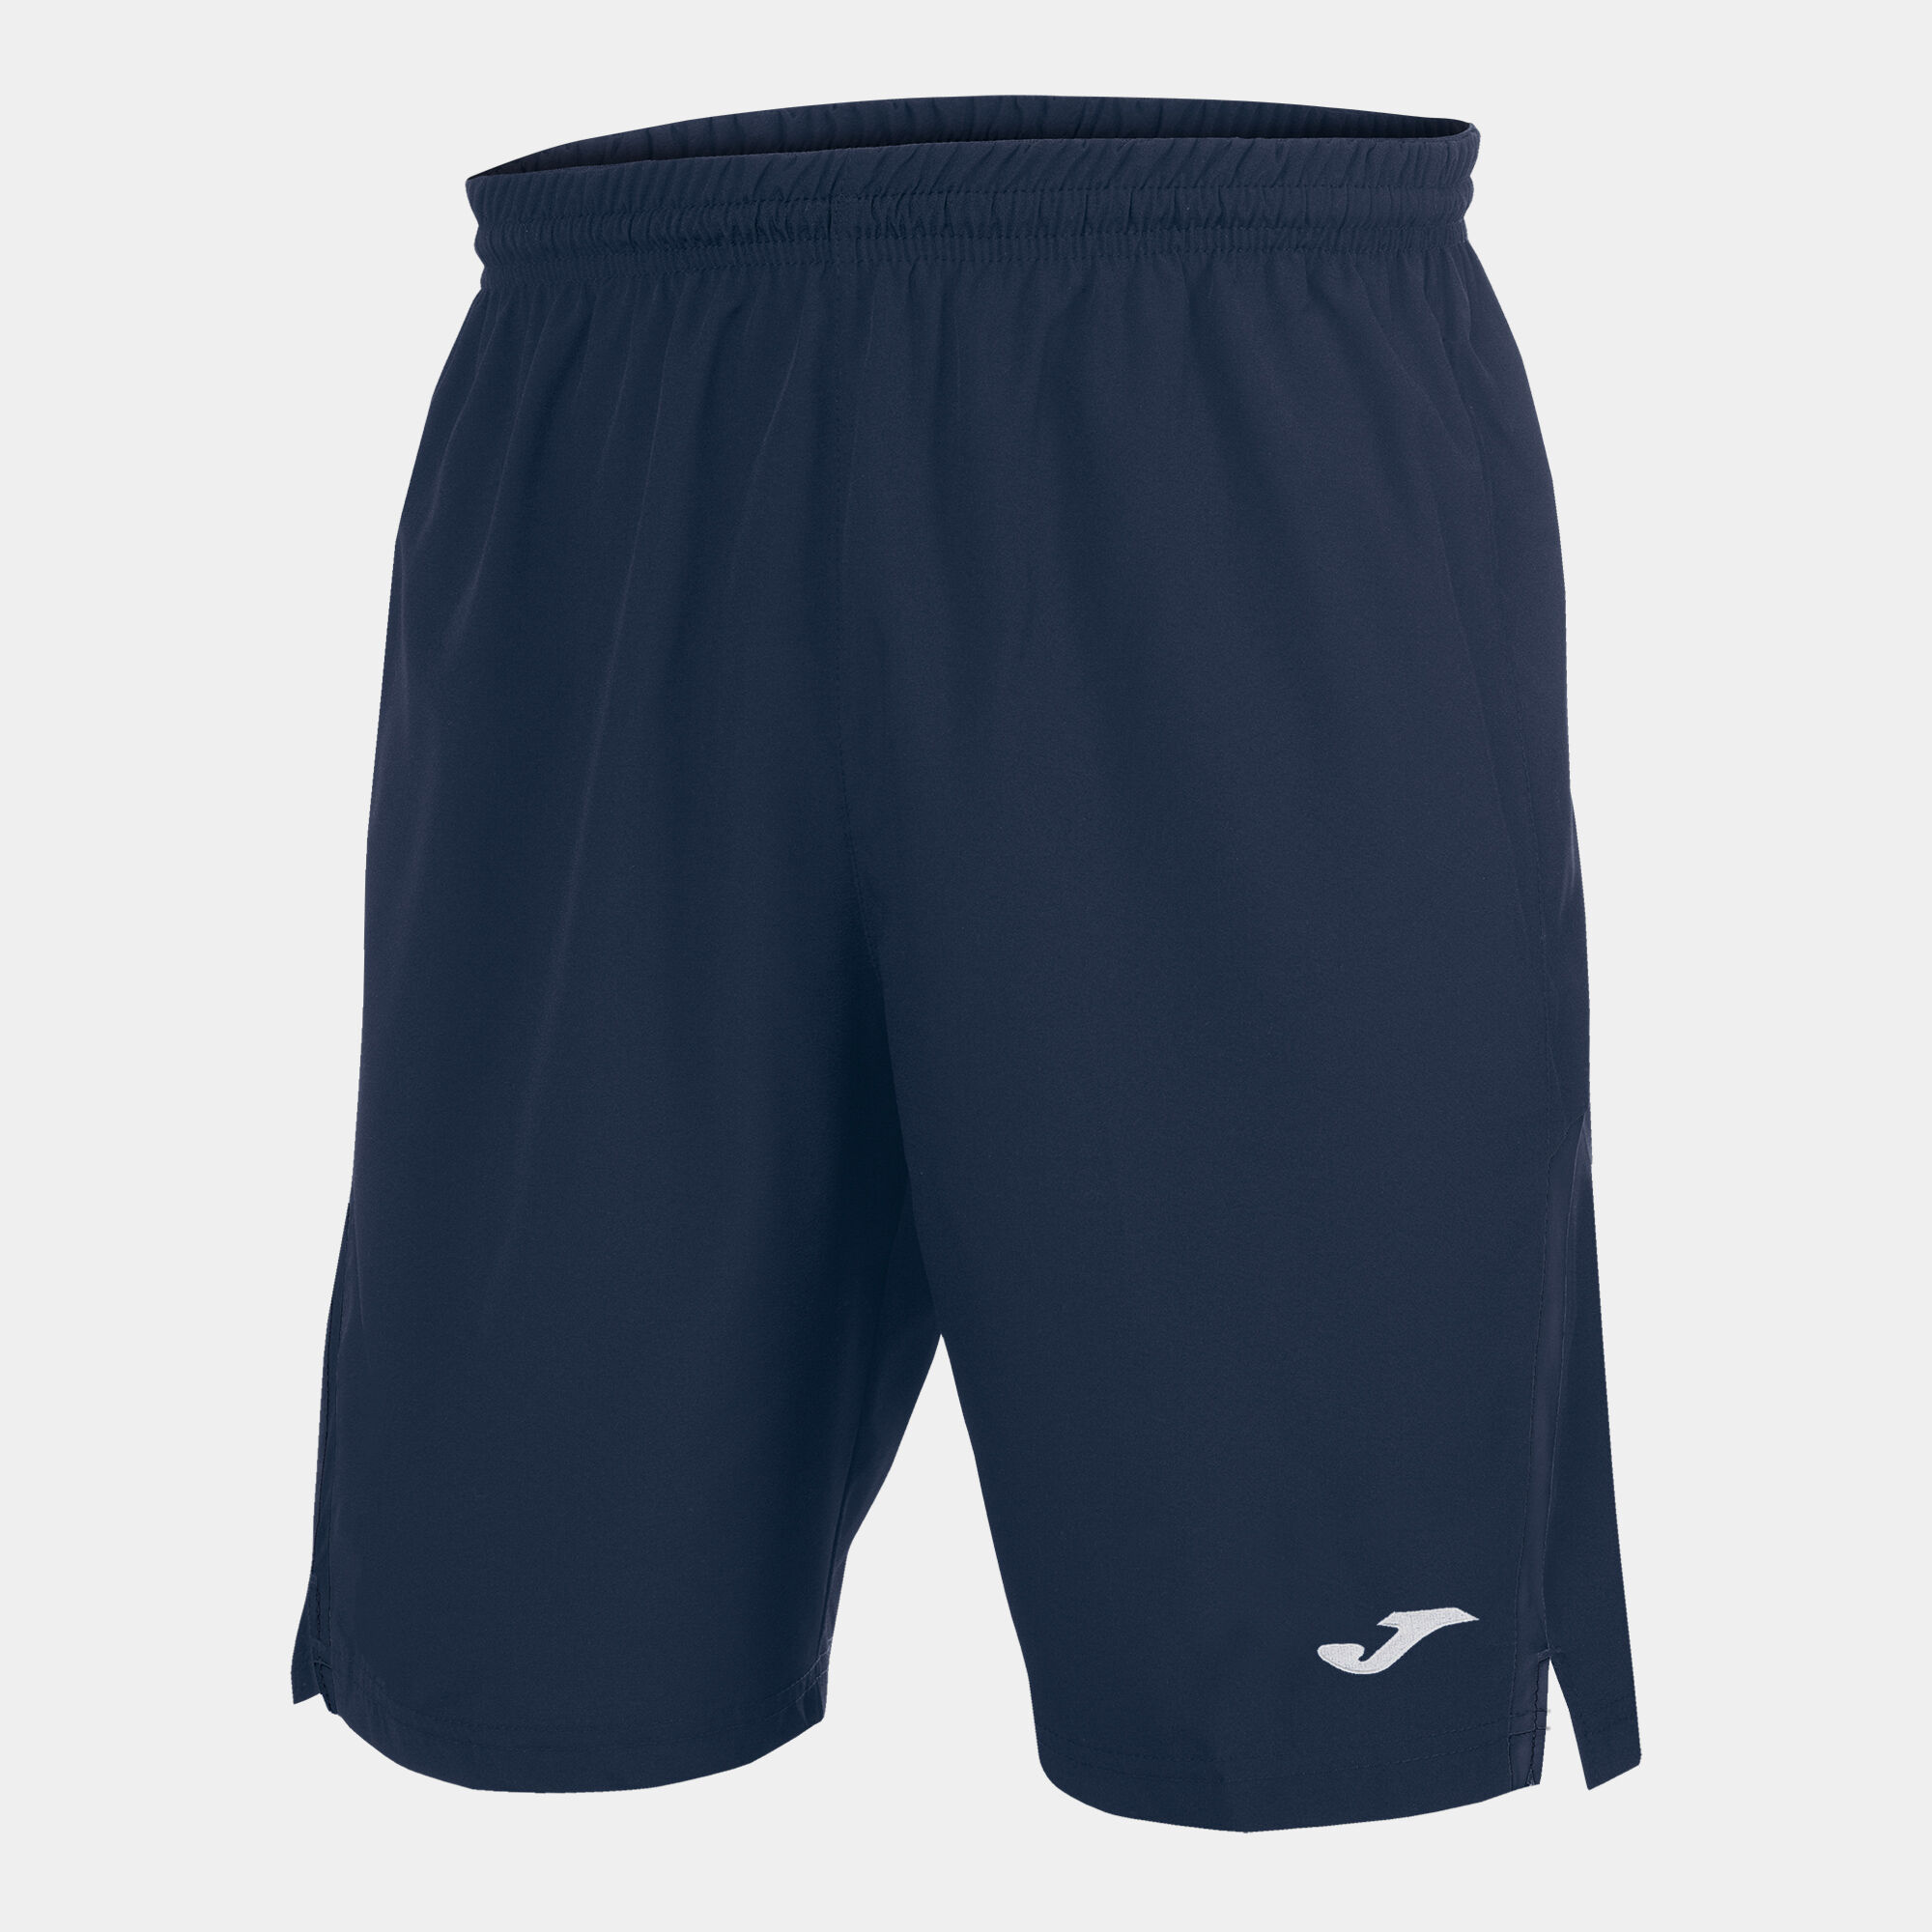 Shorts man Eurocopa II navy blue